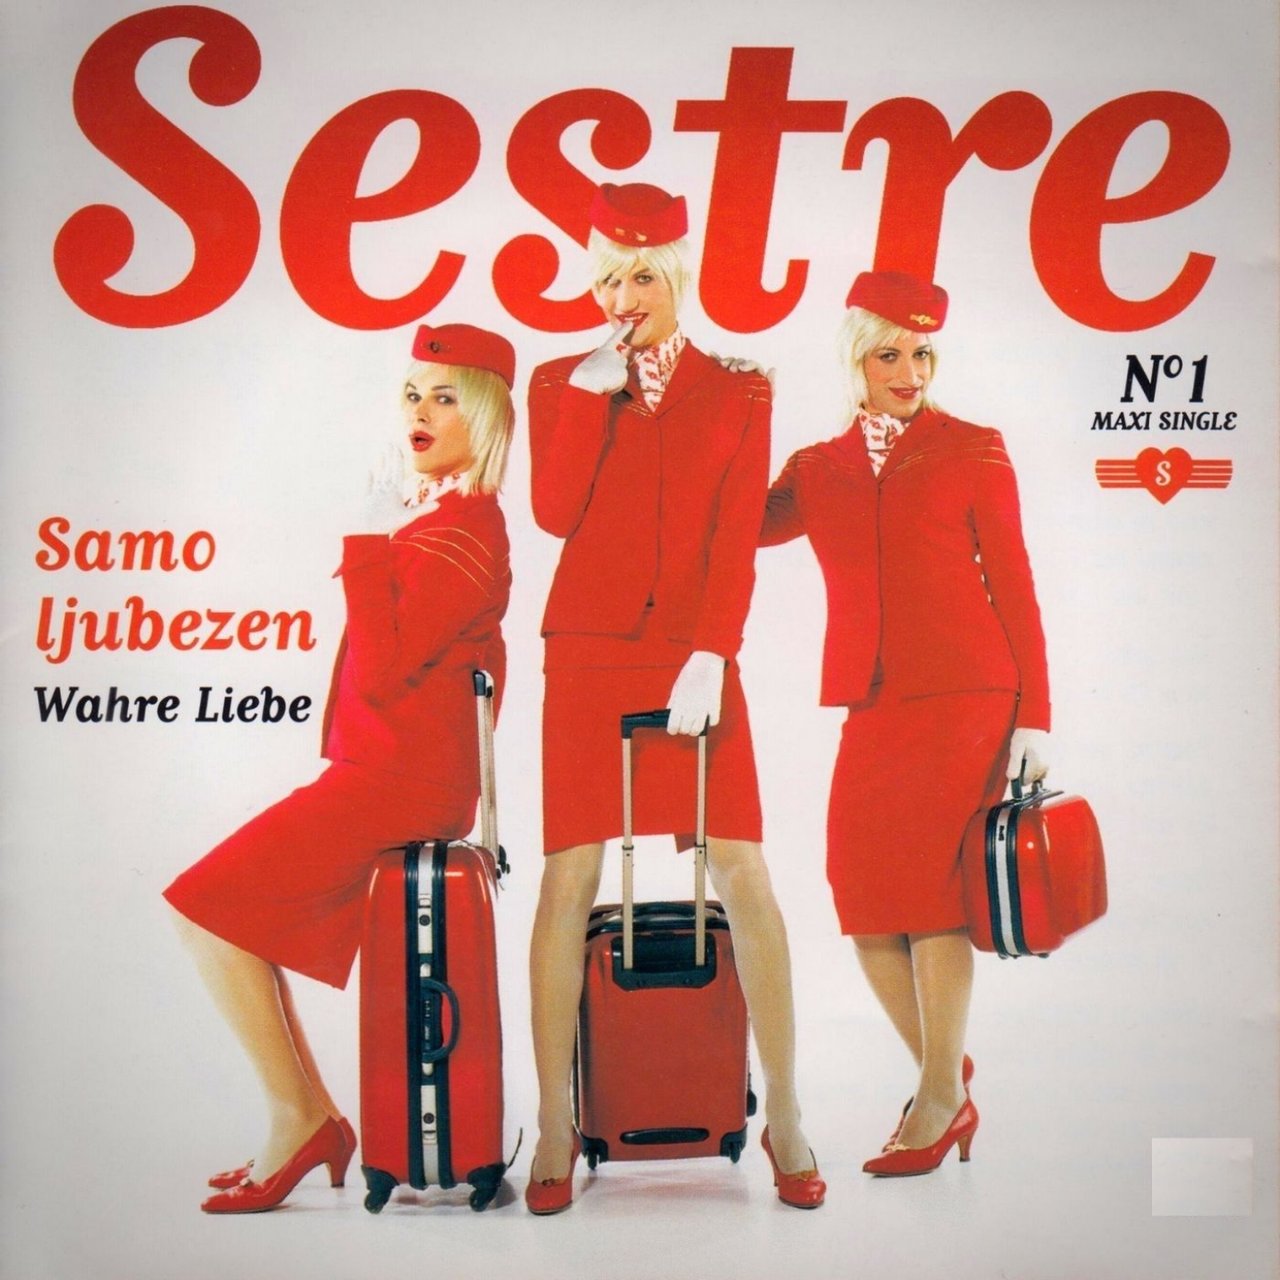 Sestre — Samo ljubezen cover artwork